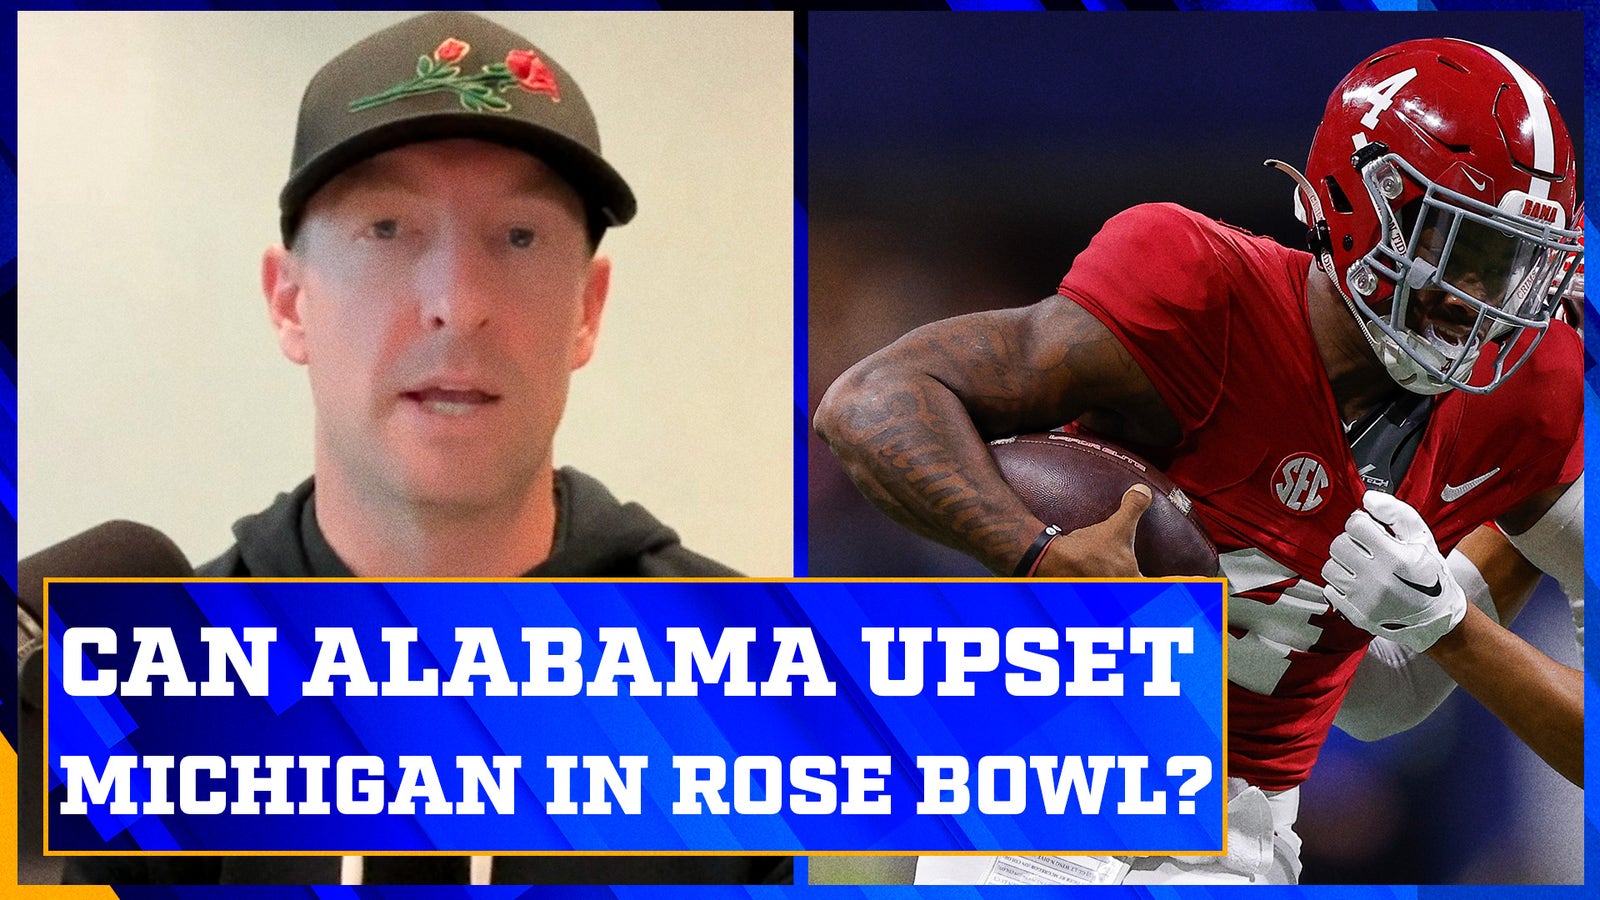 Rose Bowl Preview: Will Alabama and Nick Saban topple Michigan and Jim Harbaugh?